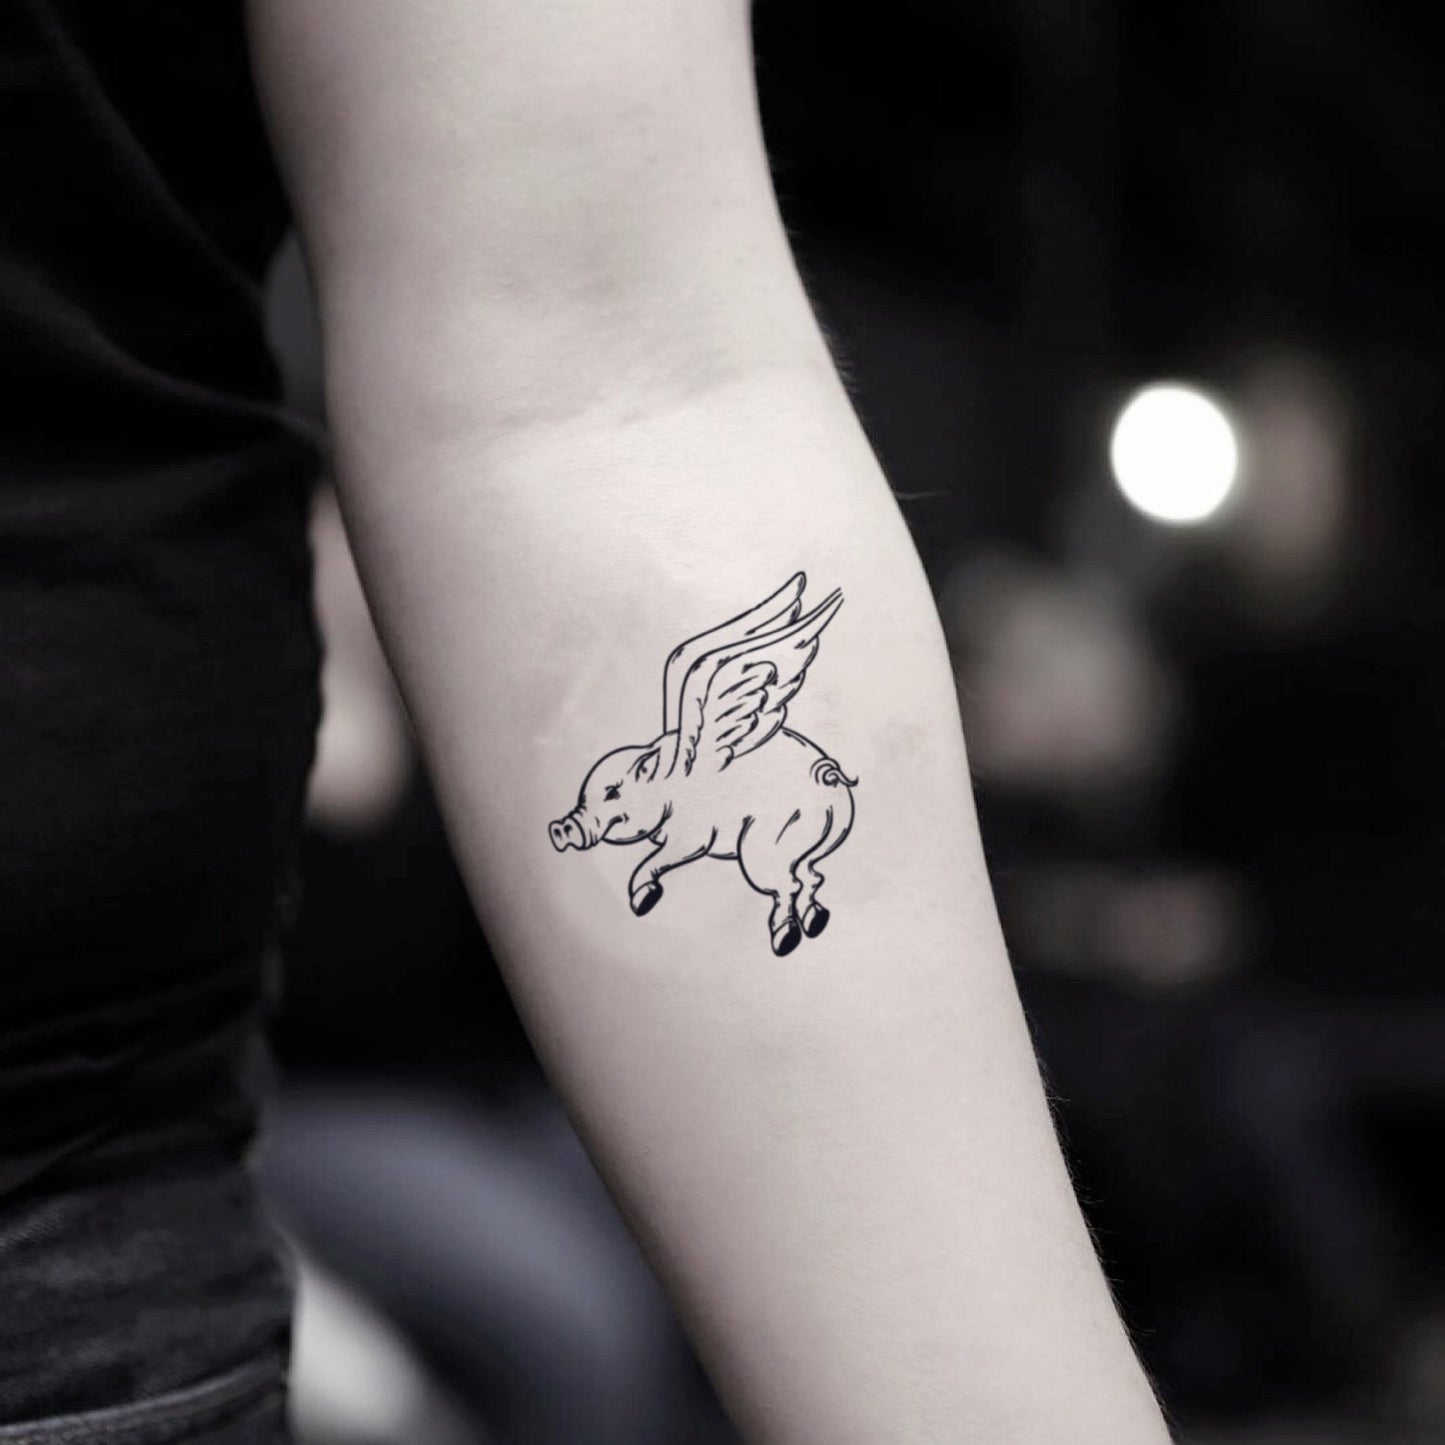 fake small flying pig piggy animal temporary tattoo sticker design idea on inner arm